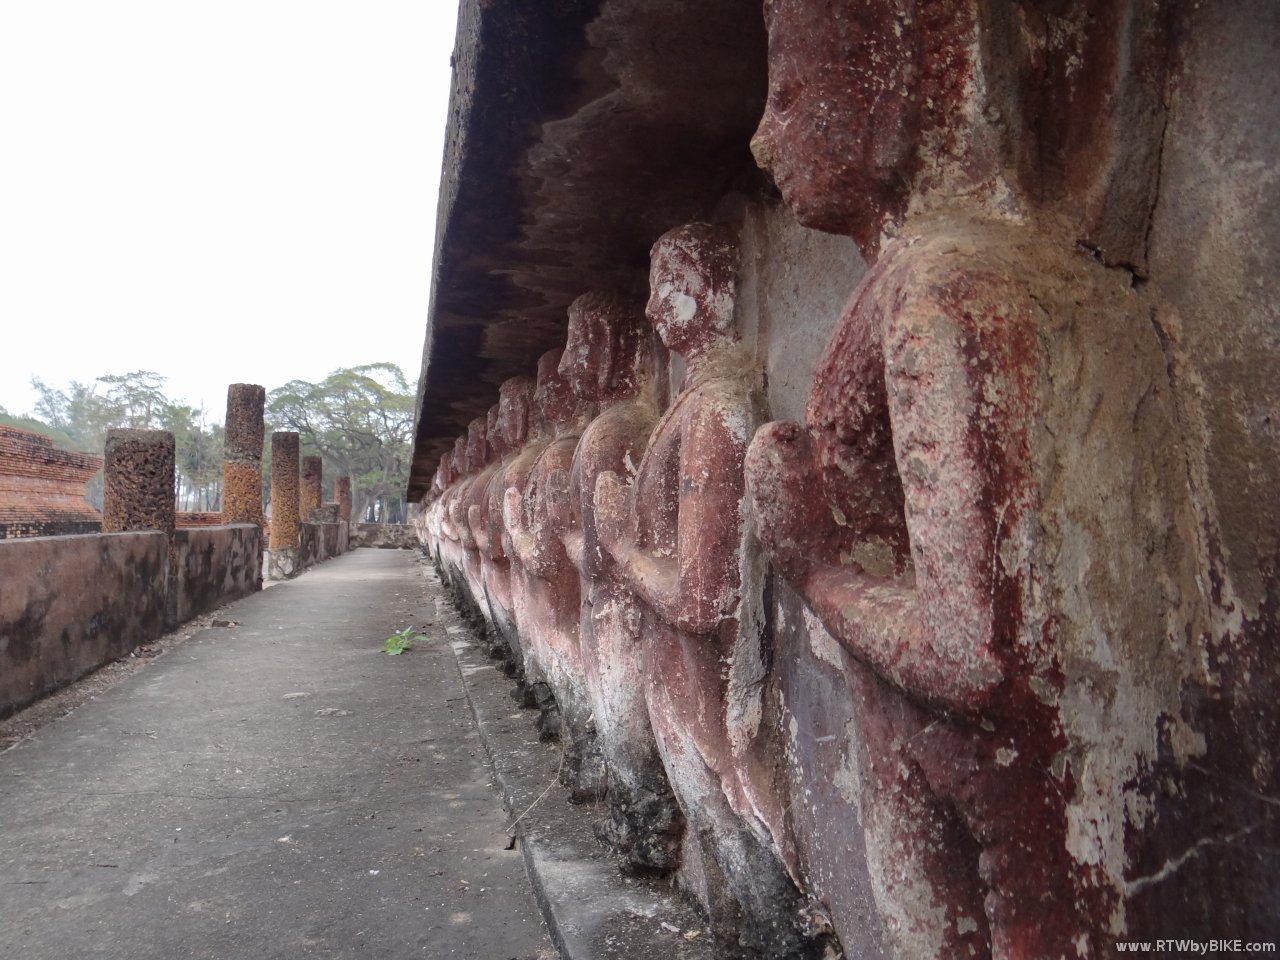 Sukhothai Historical Park